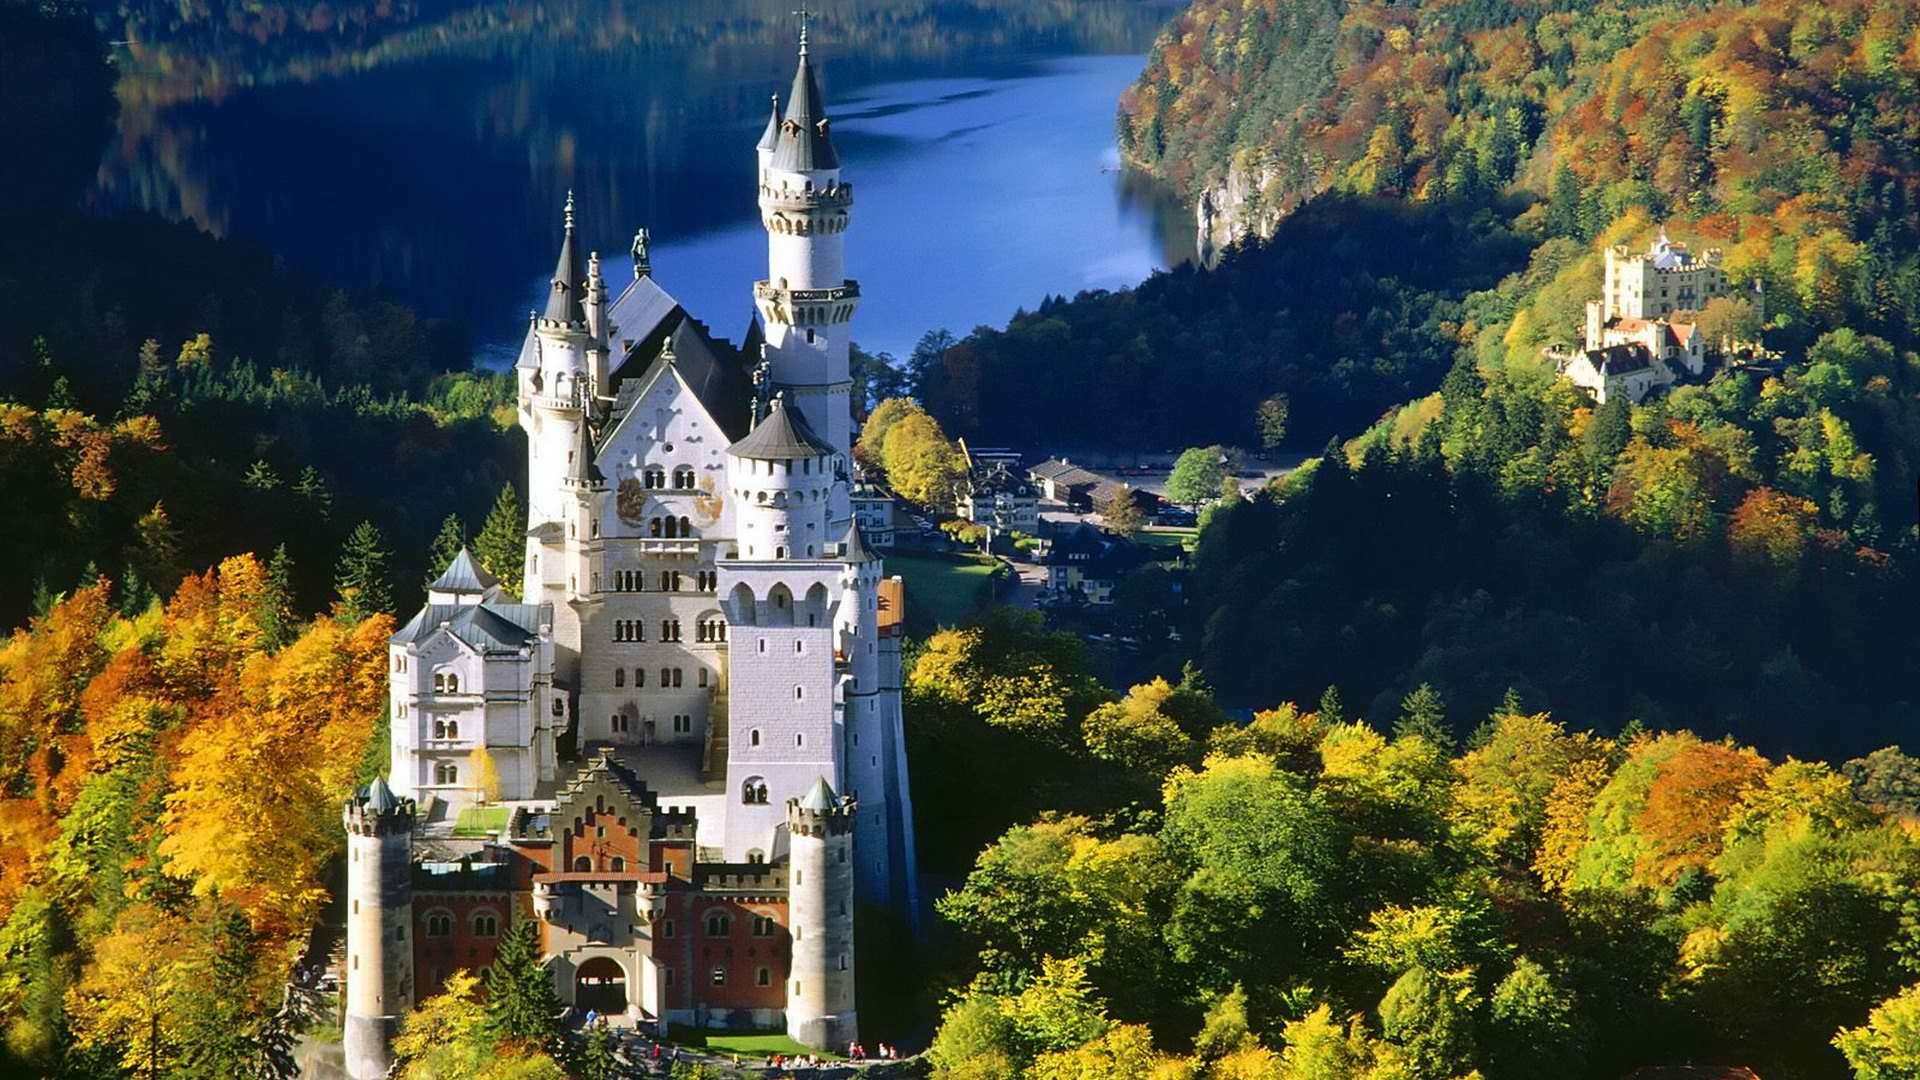 man made, neuschwanstein castle, castle, castles cell phone wallpapers